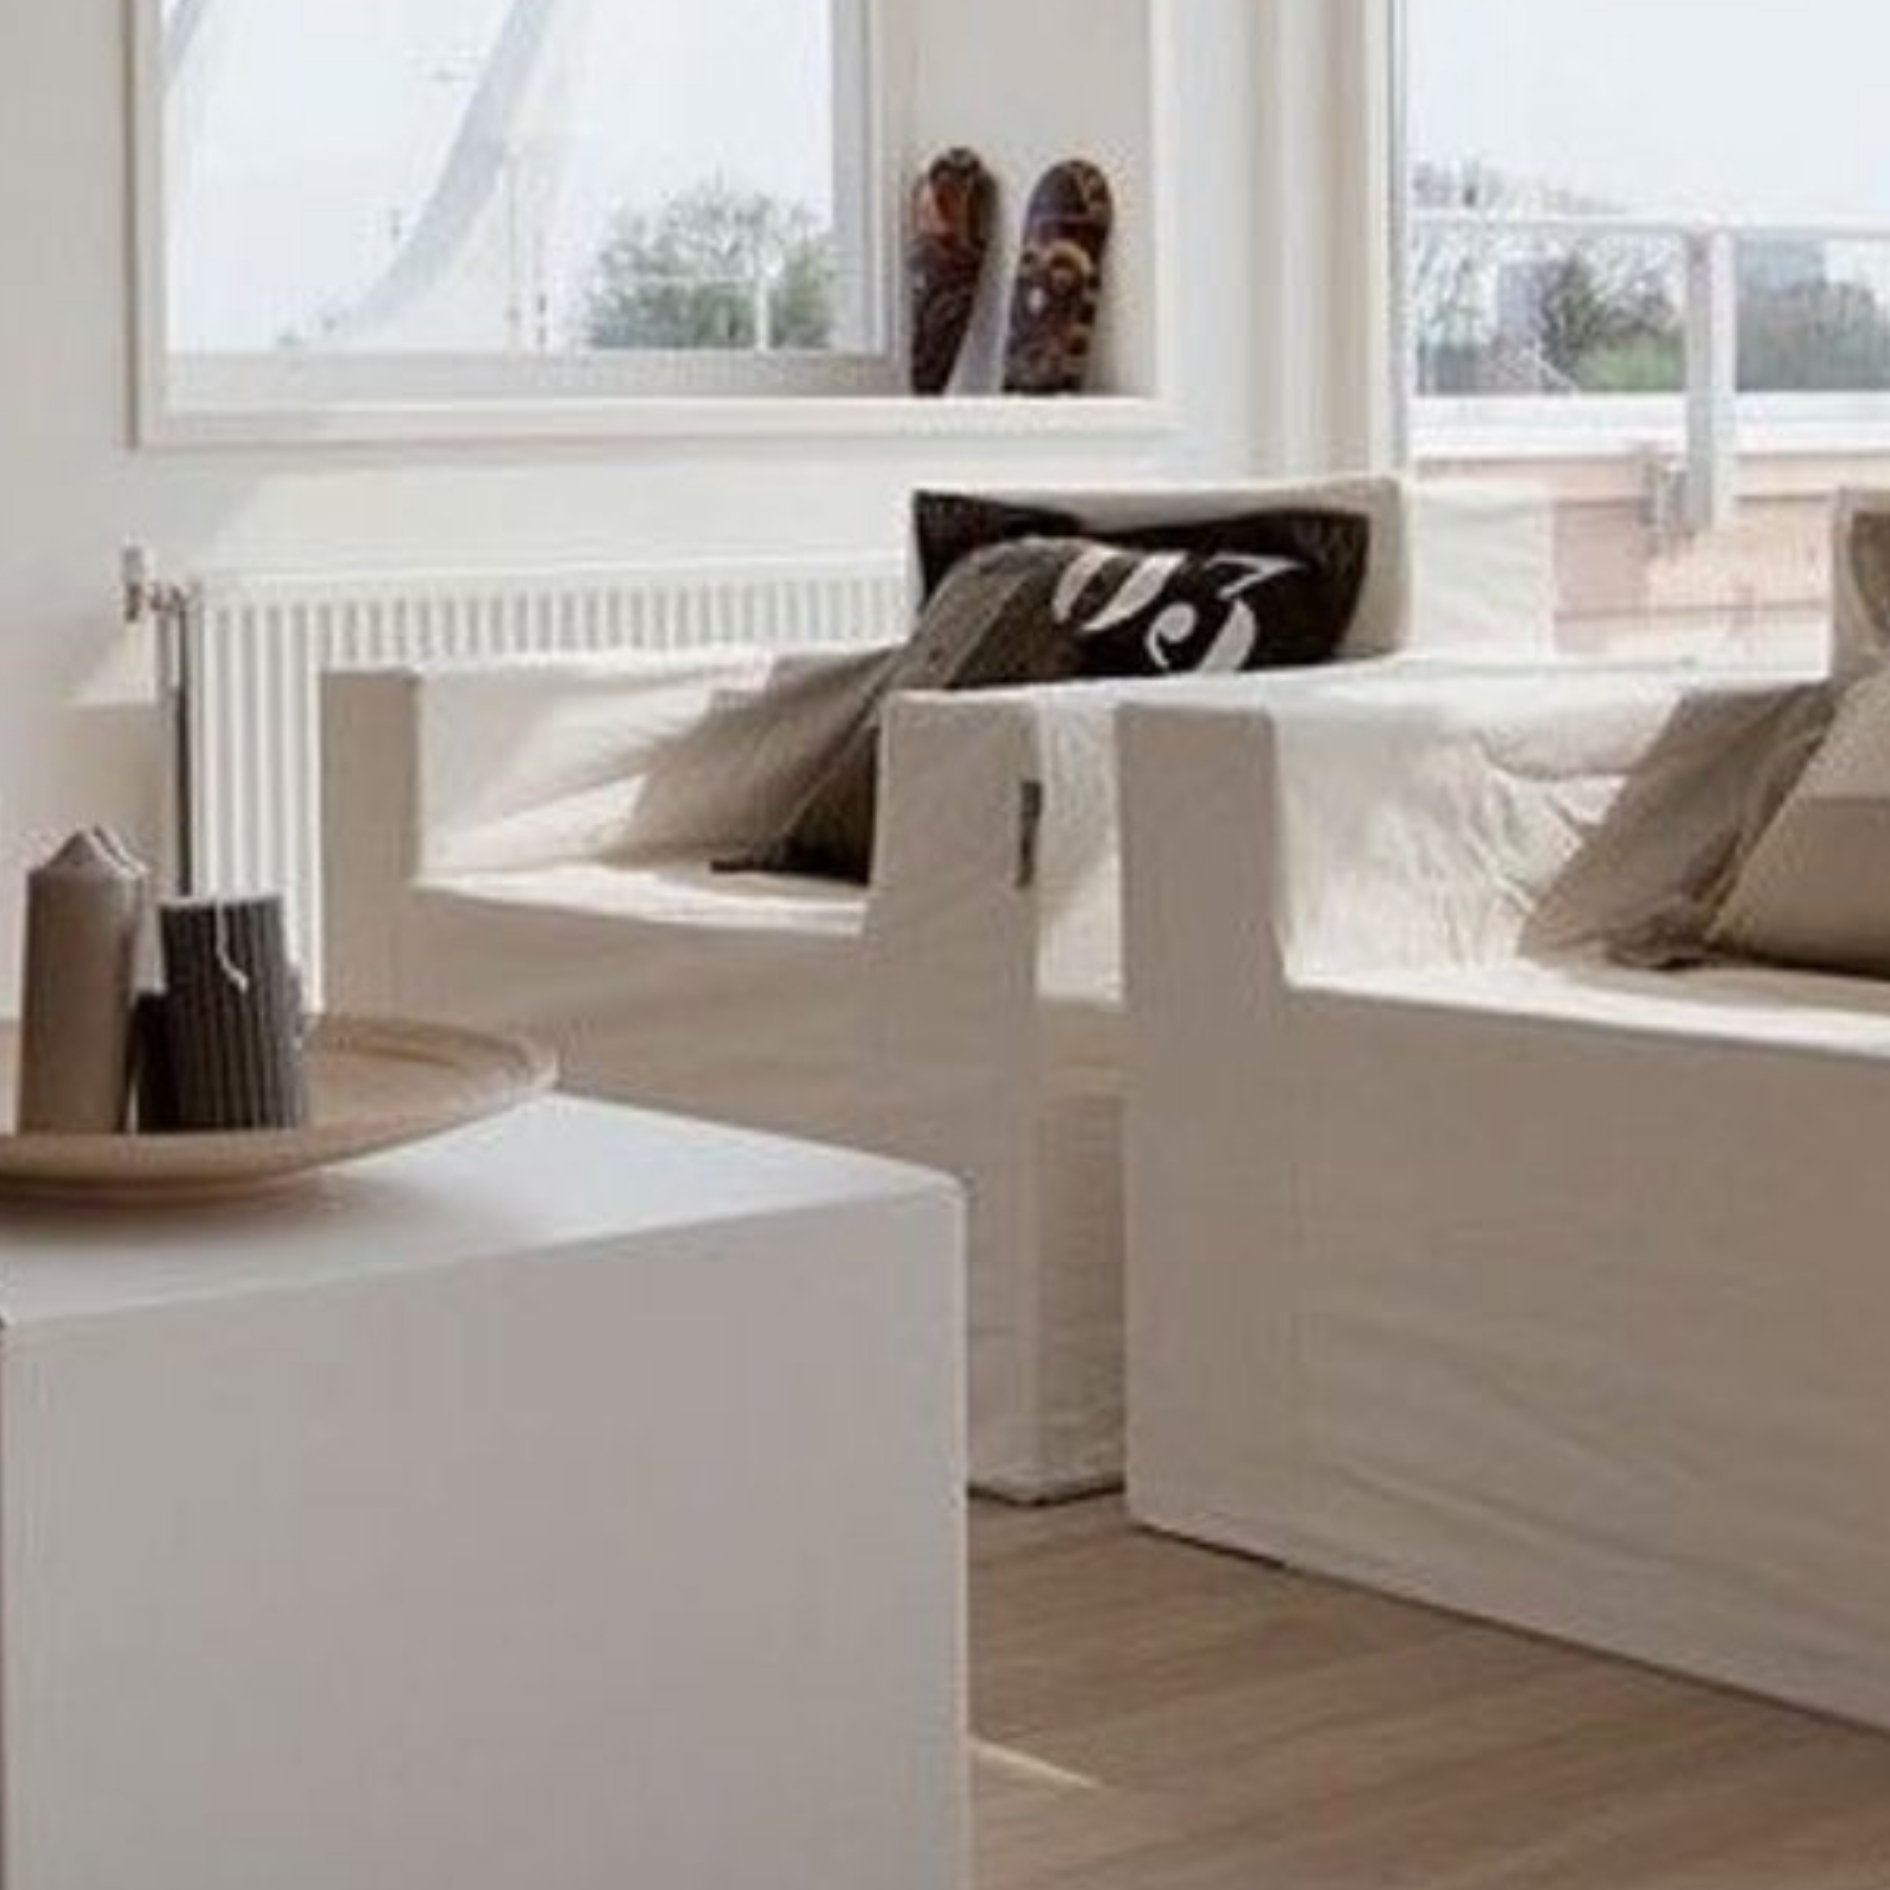 grip Bijna dood Dwaal Styling pakket kartonnen meubels | Homebooster